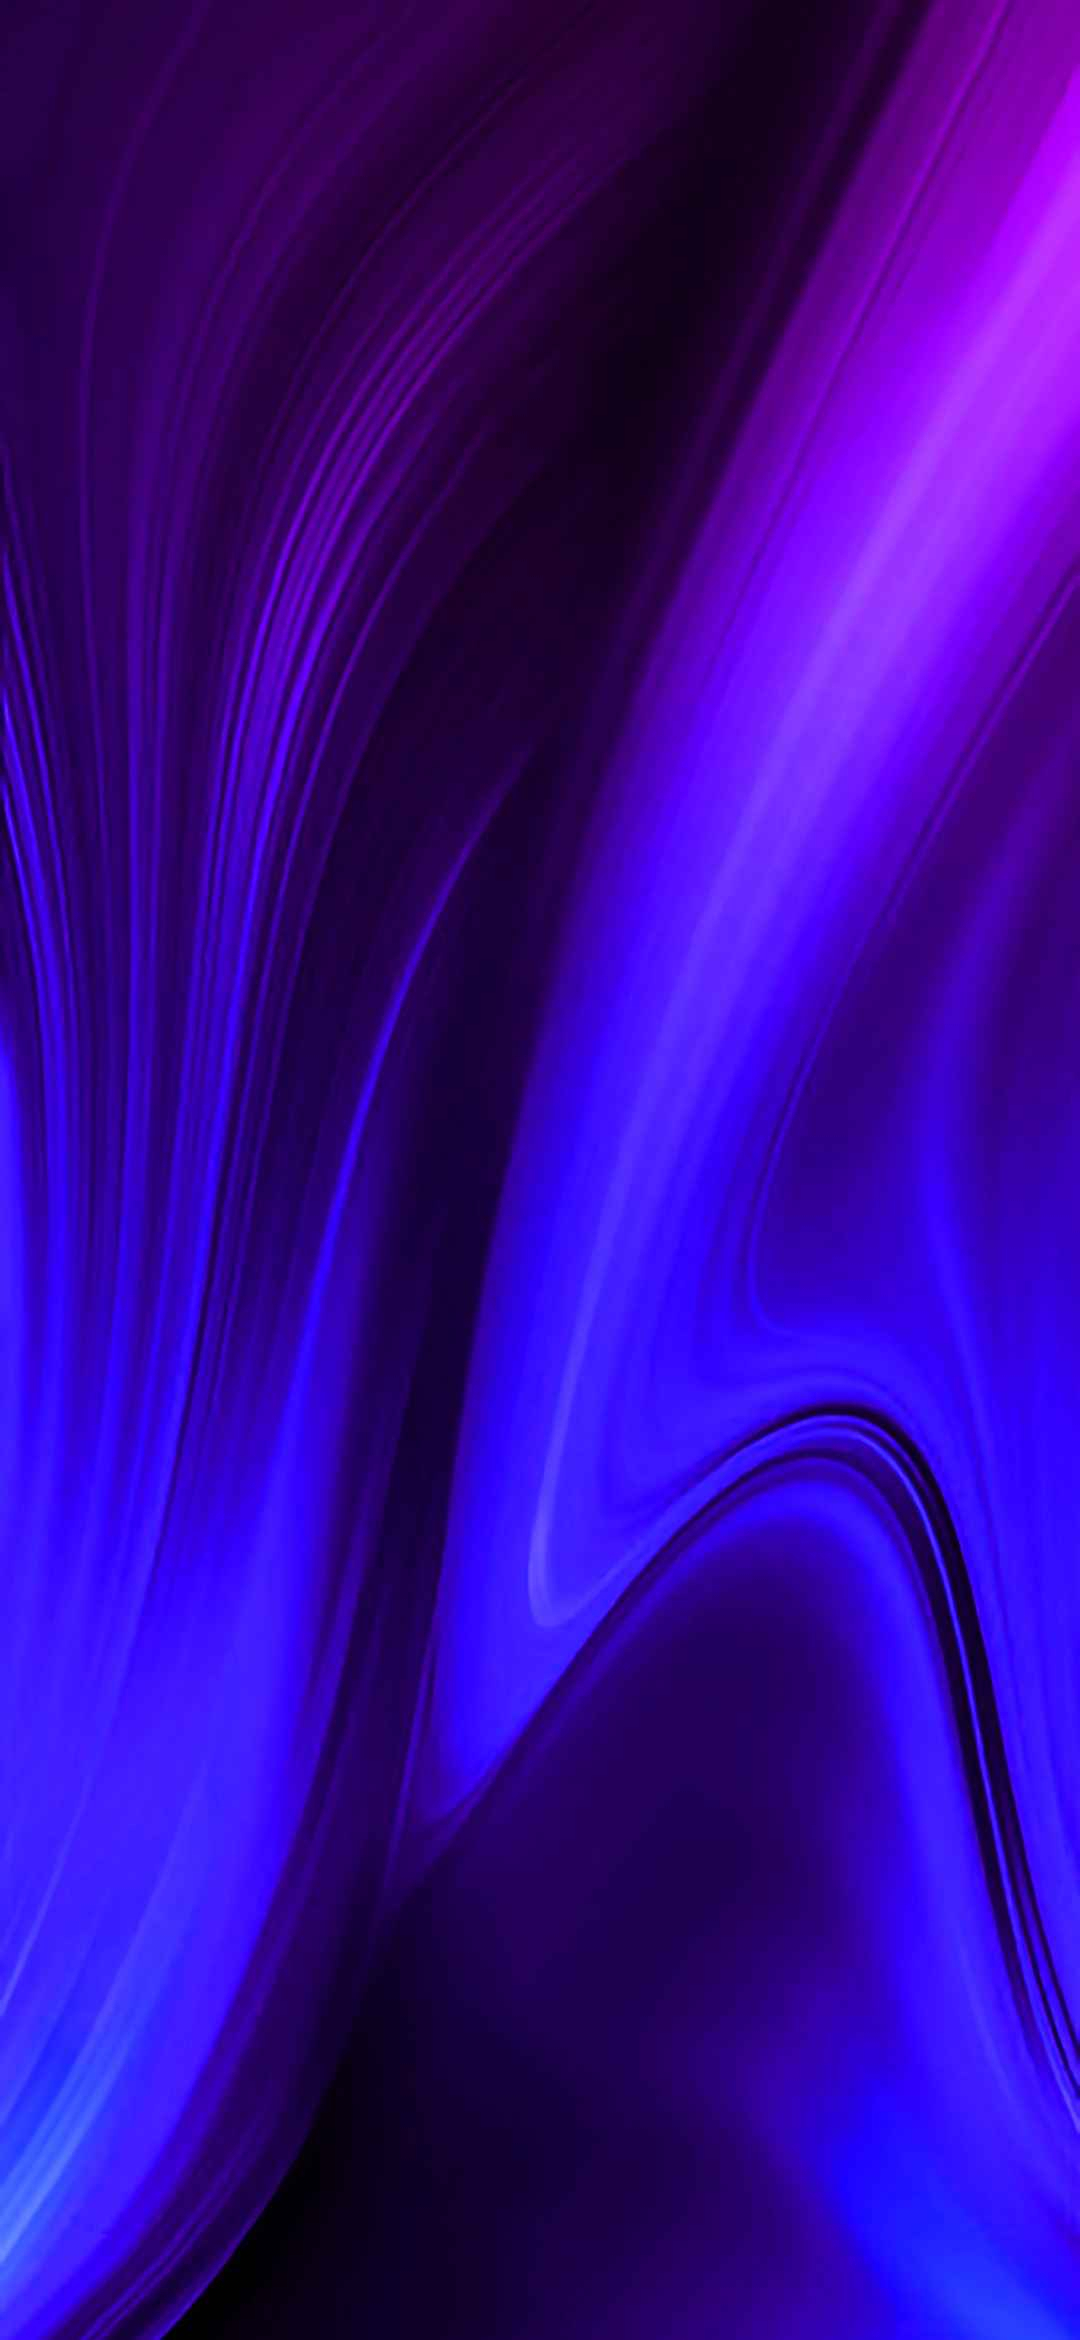 samsung galaxy grand prime plus wallpaper,blue,violet,purple,electric blue,light